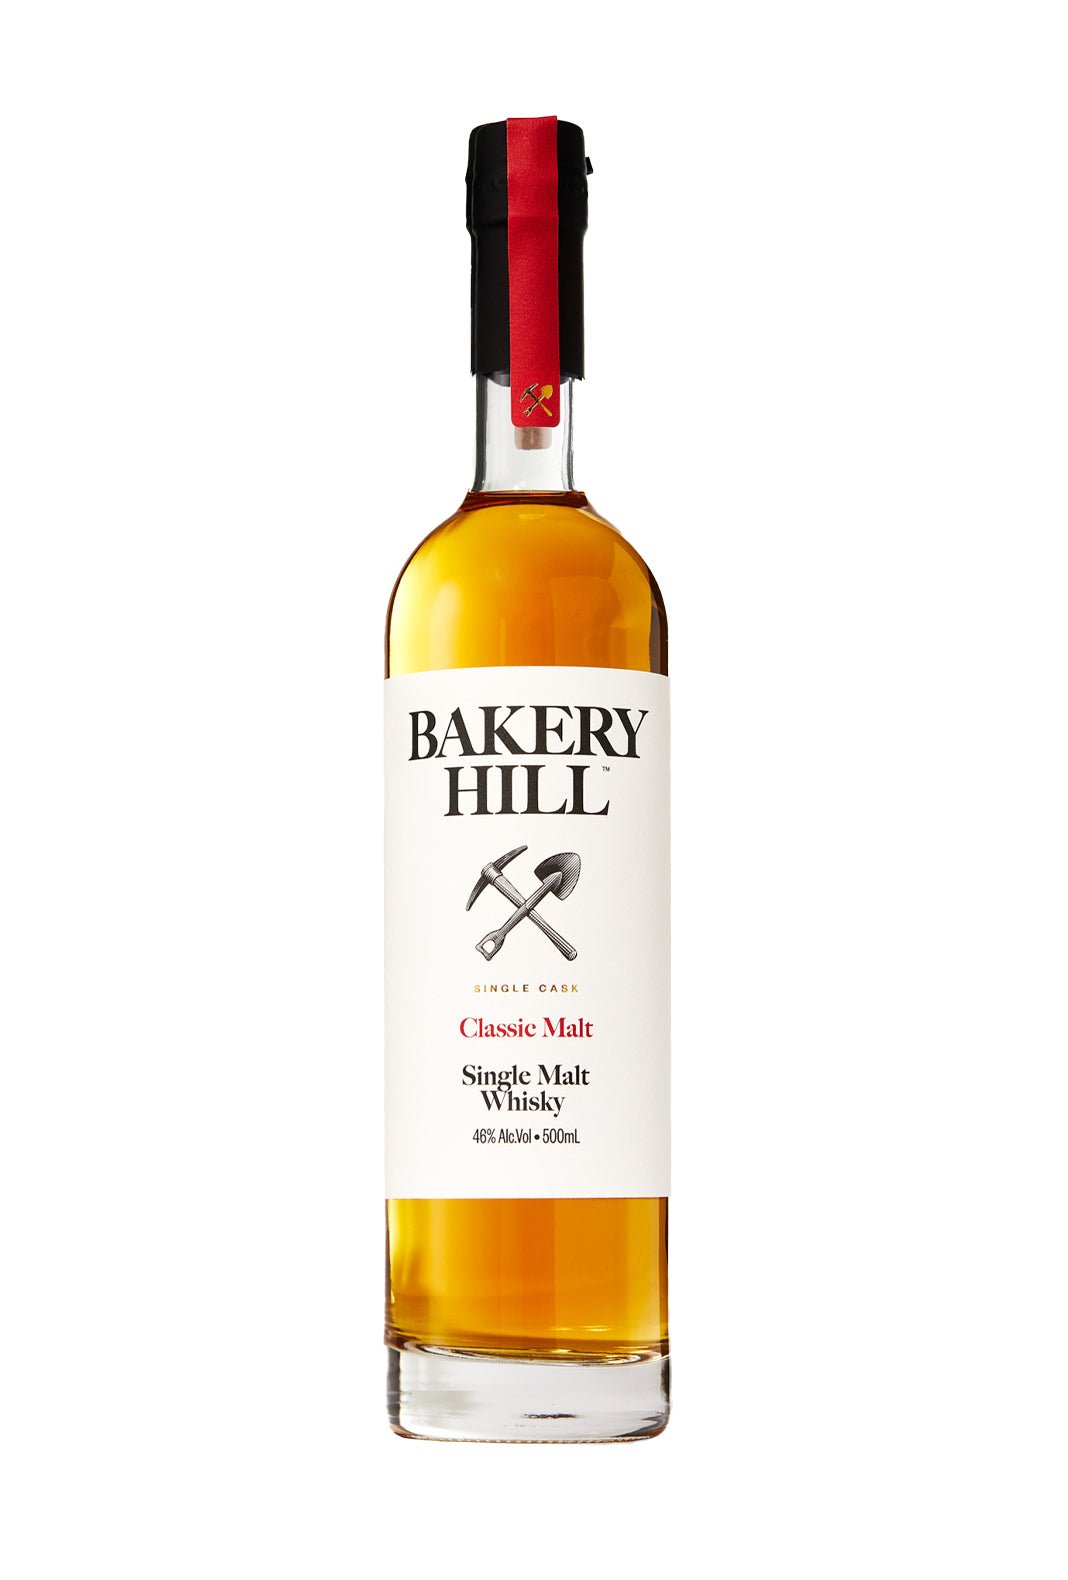 Bakery Hill Classic Malt Whisky 46% 500ml | Whisky | Shop online at Spirits of France